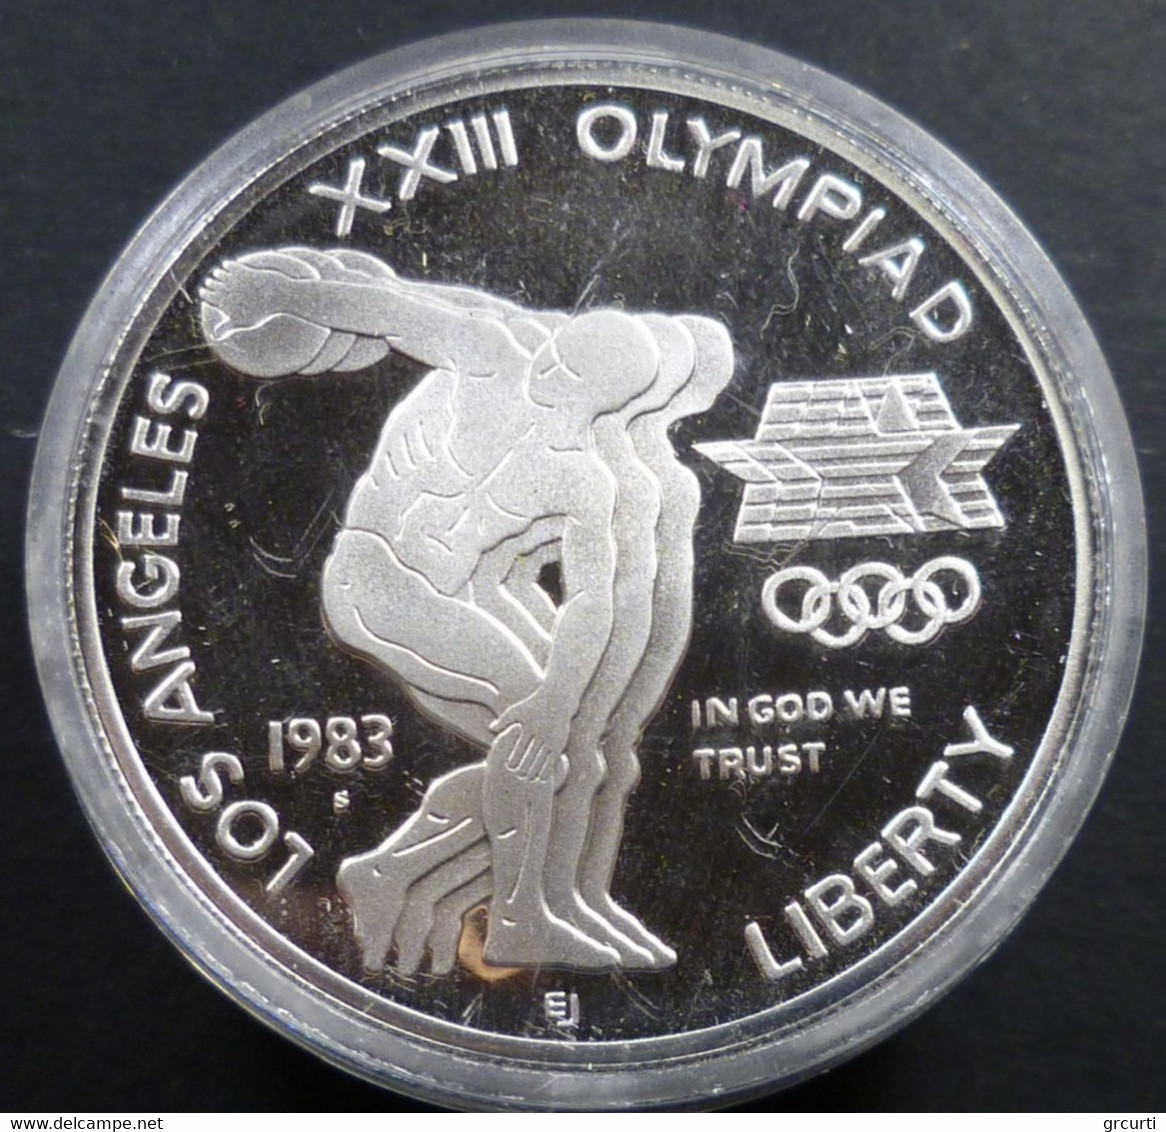 Stati Uniti D'America - 1 Dollaro 1983 S - Olimpiadi Di Los Angeles '84 -  KM# 209 - Gedenkmünzen